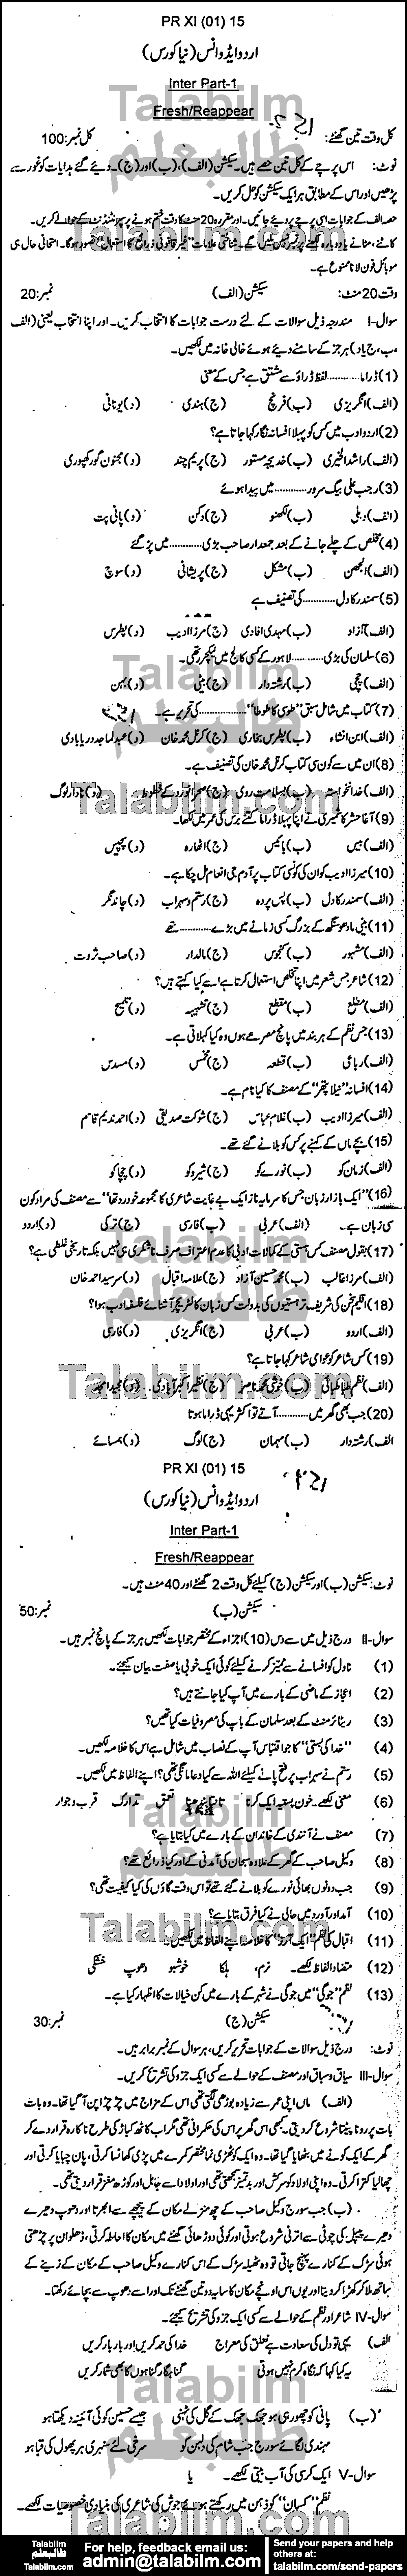 Urdu 0 past paper for Group-I 2015